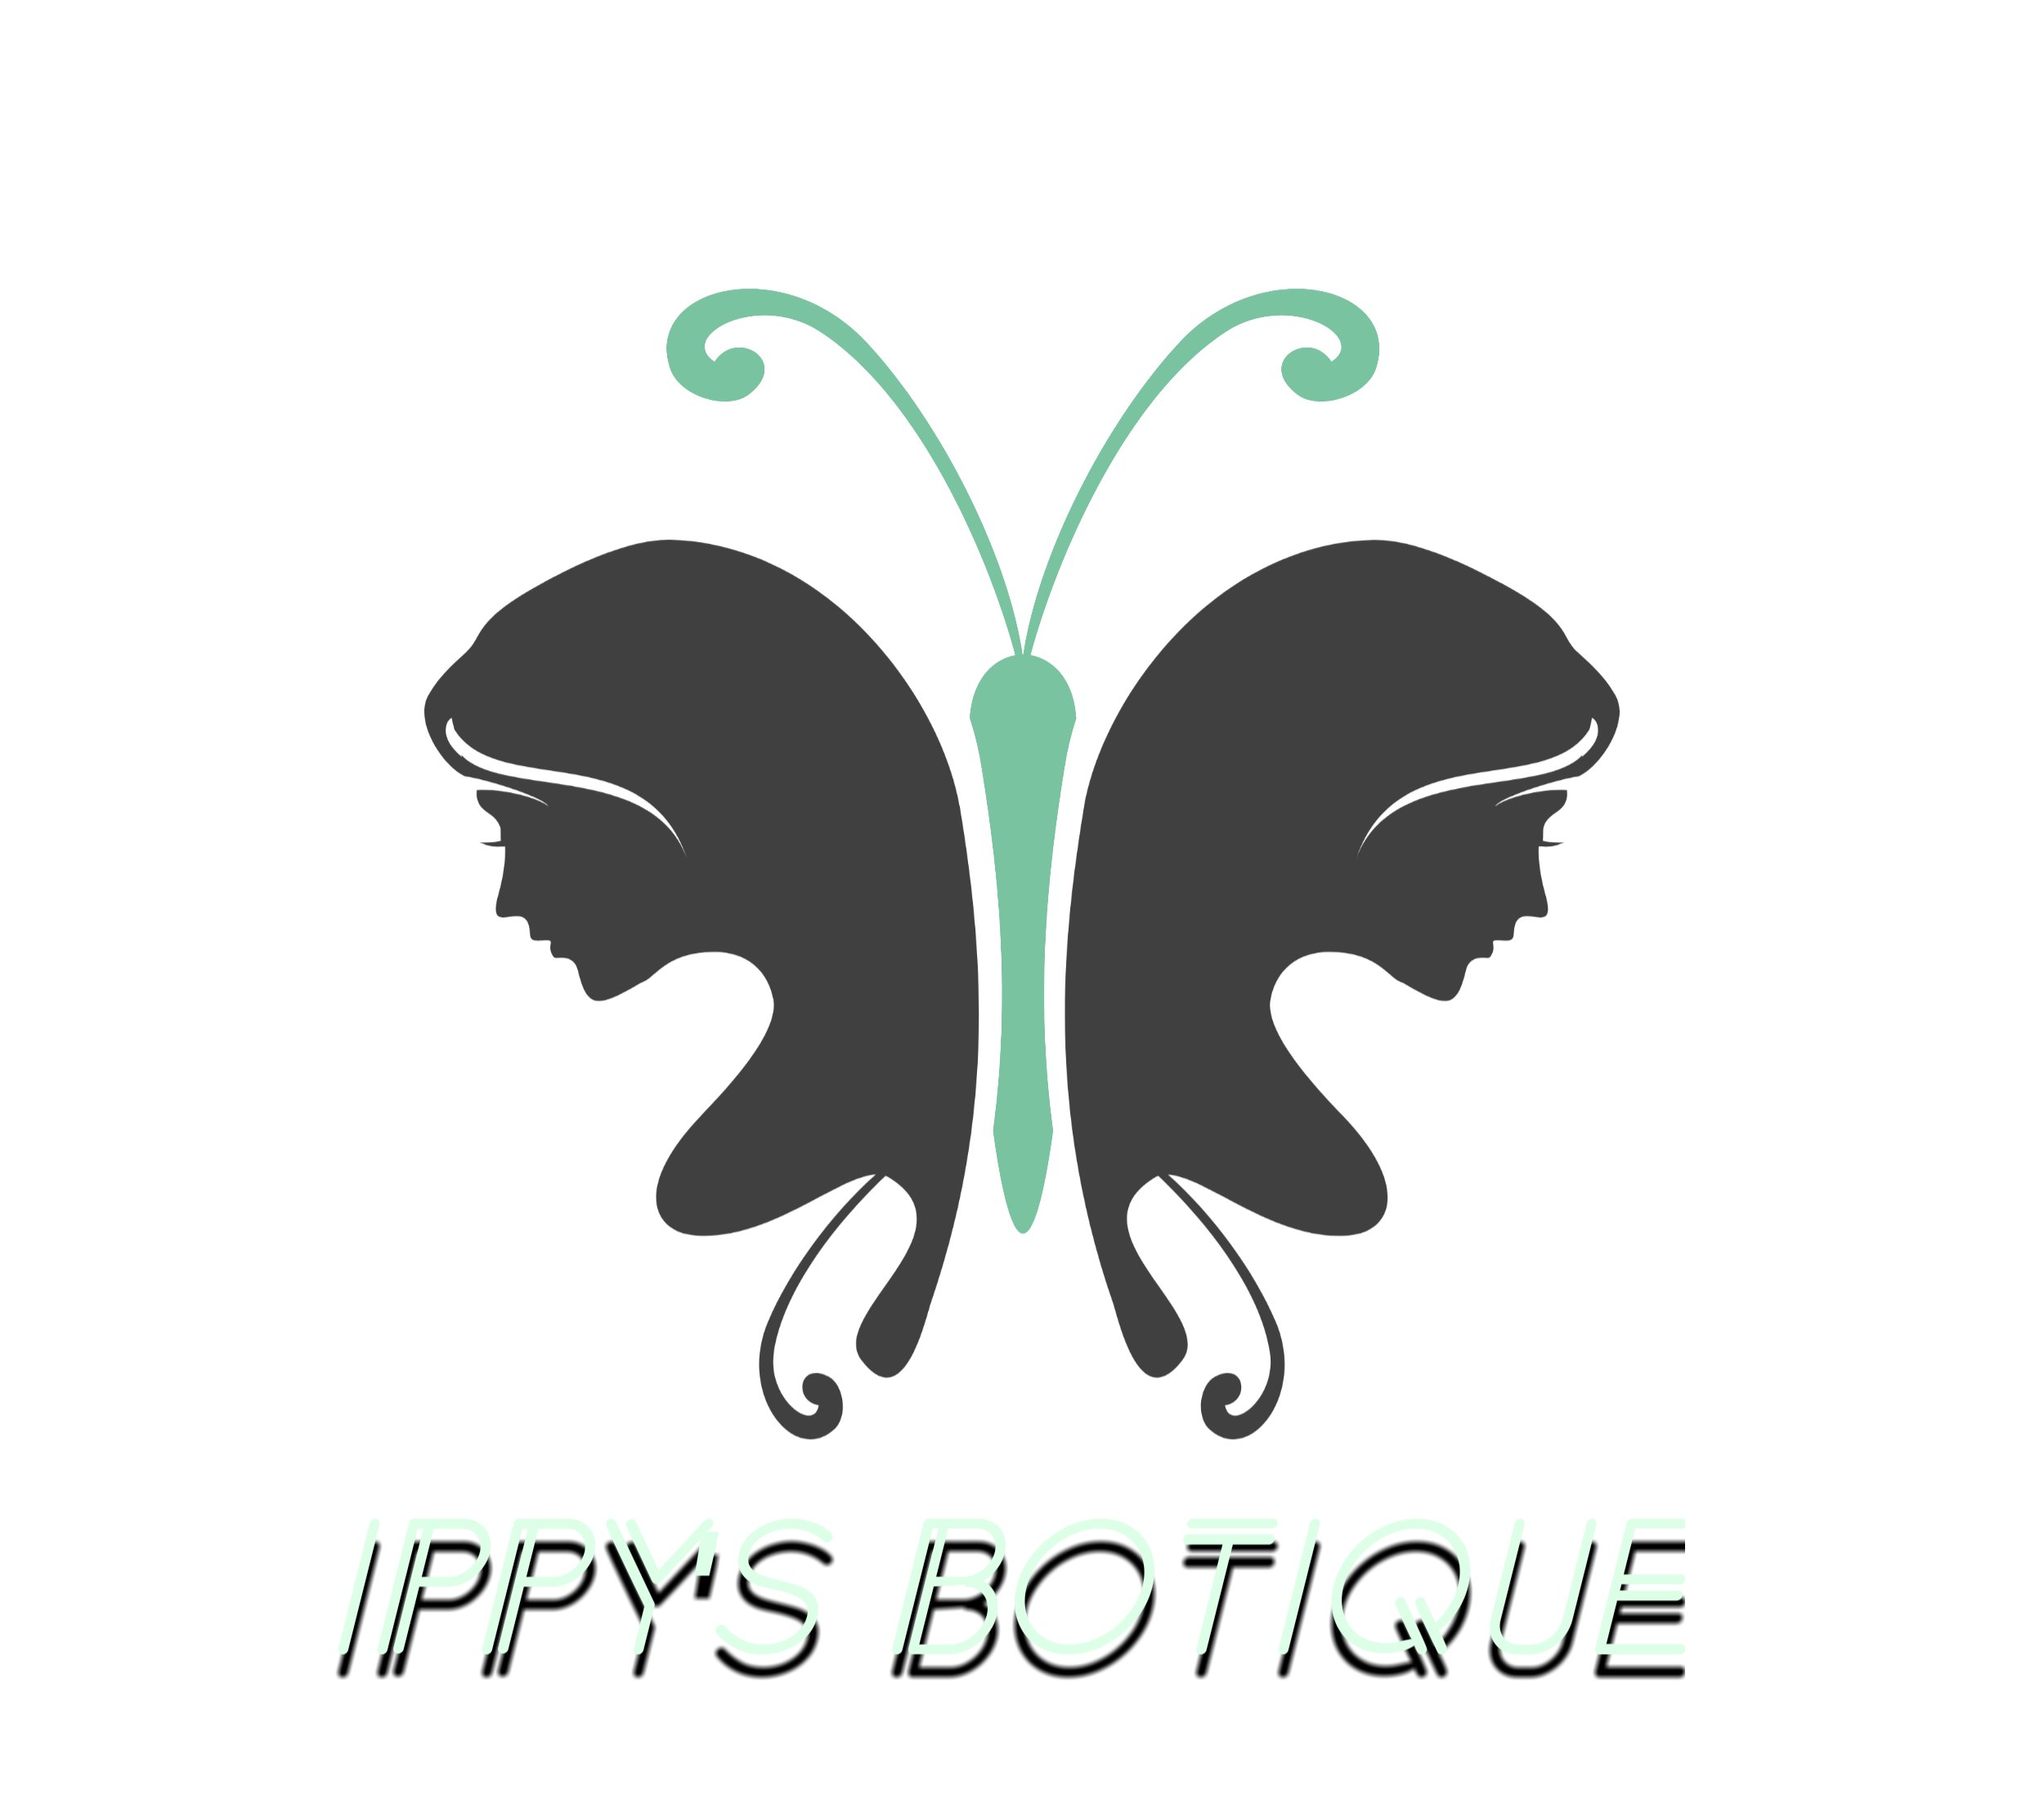 Ippy's botique providing quality wigs at ur door